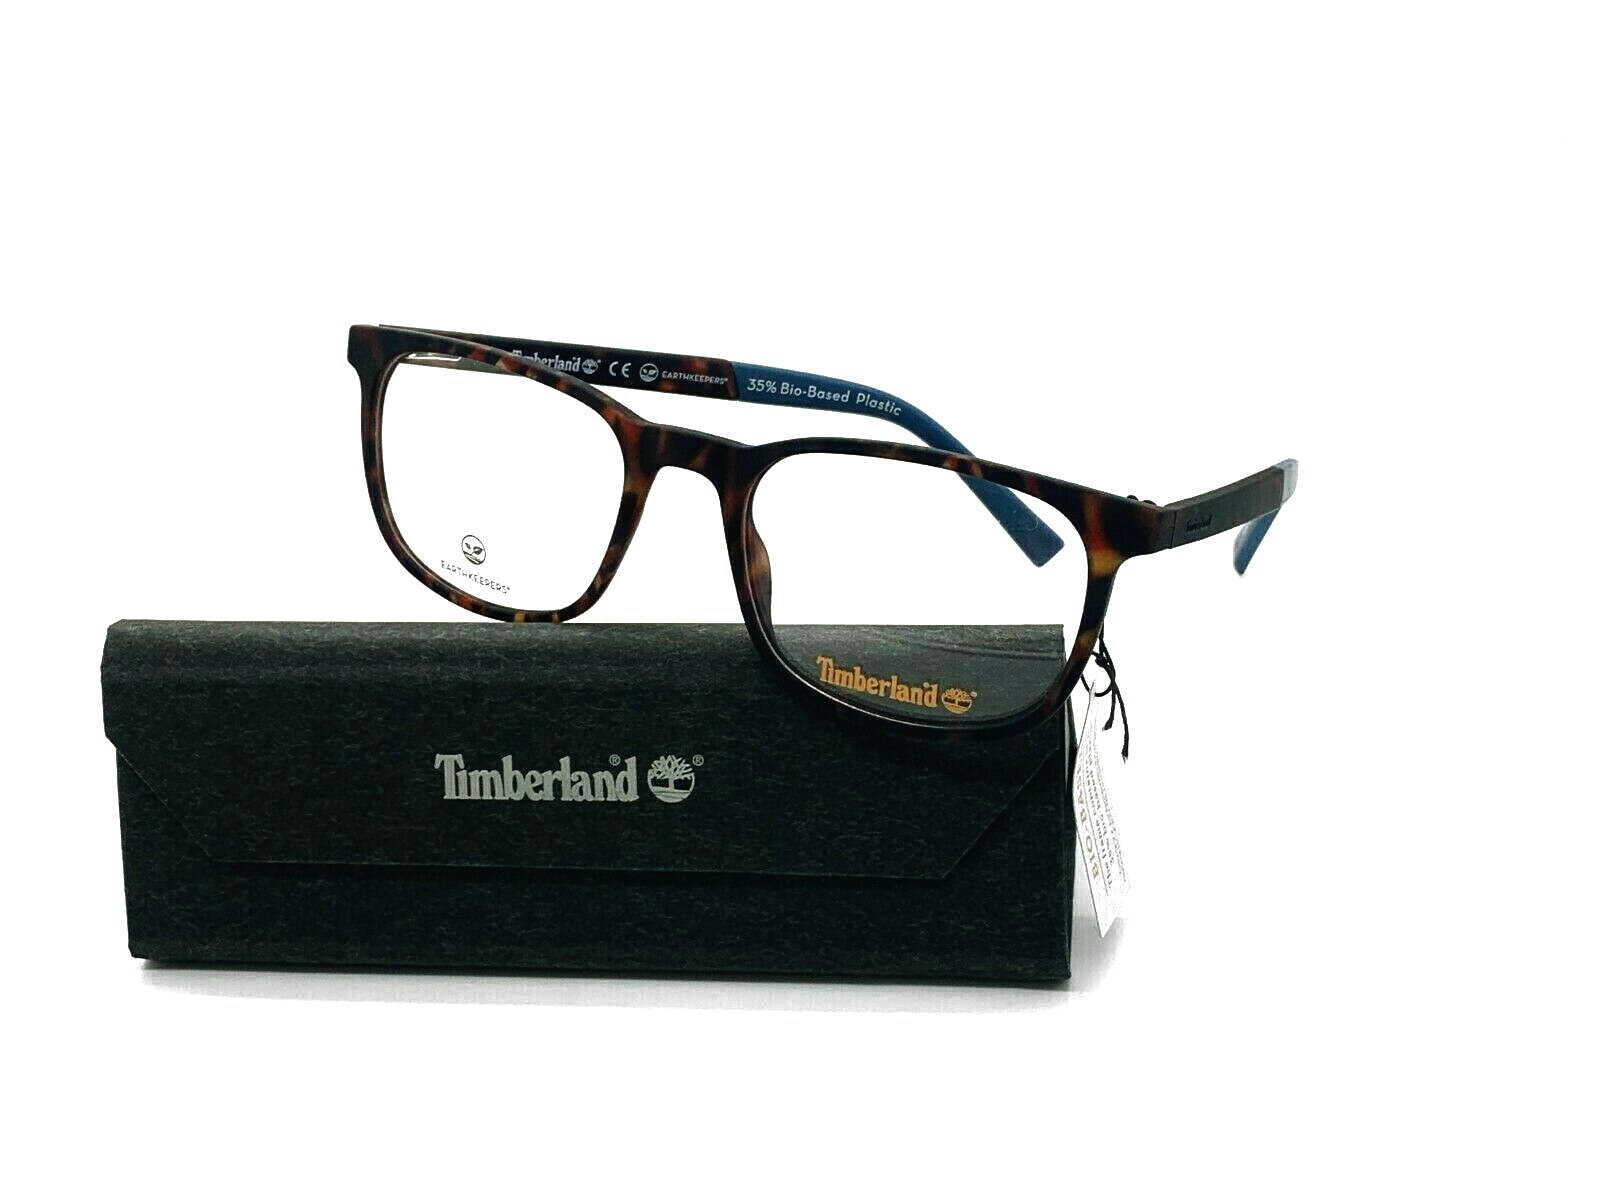 Timberland Eyeglasses Black Case Wallpaper